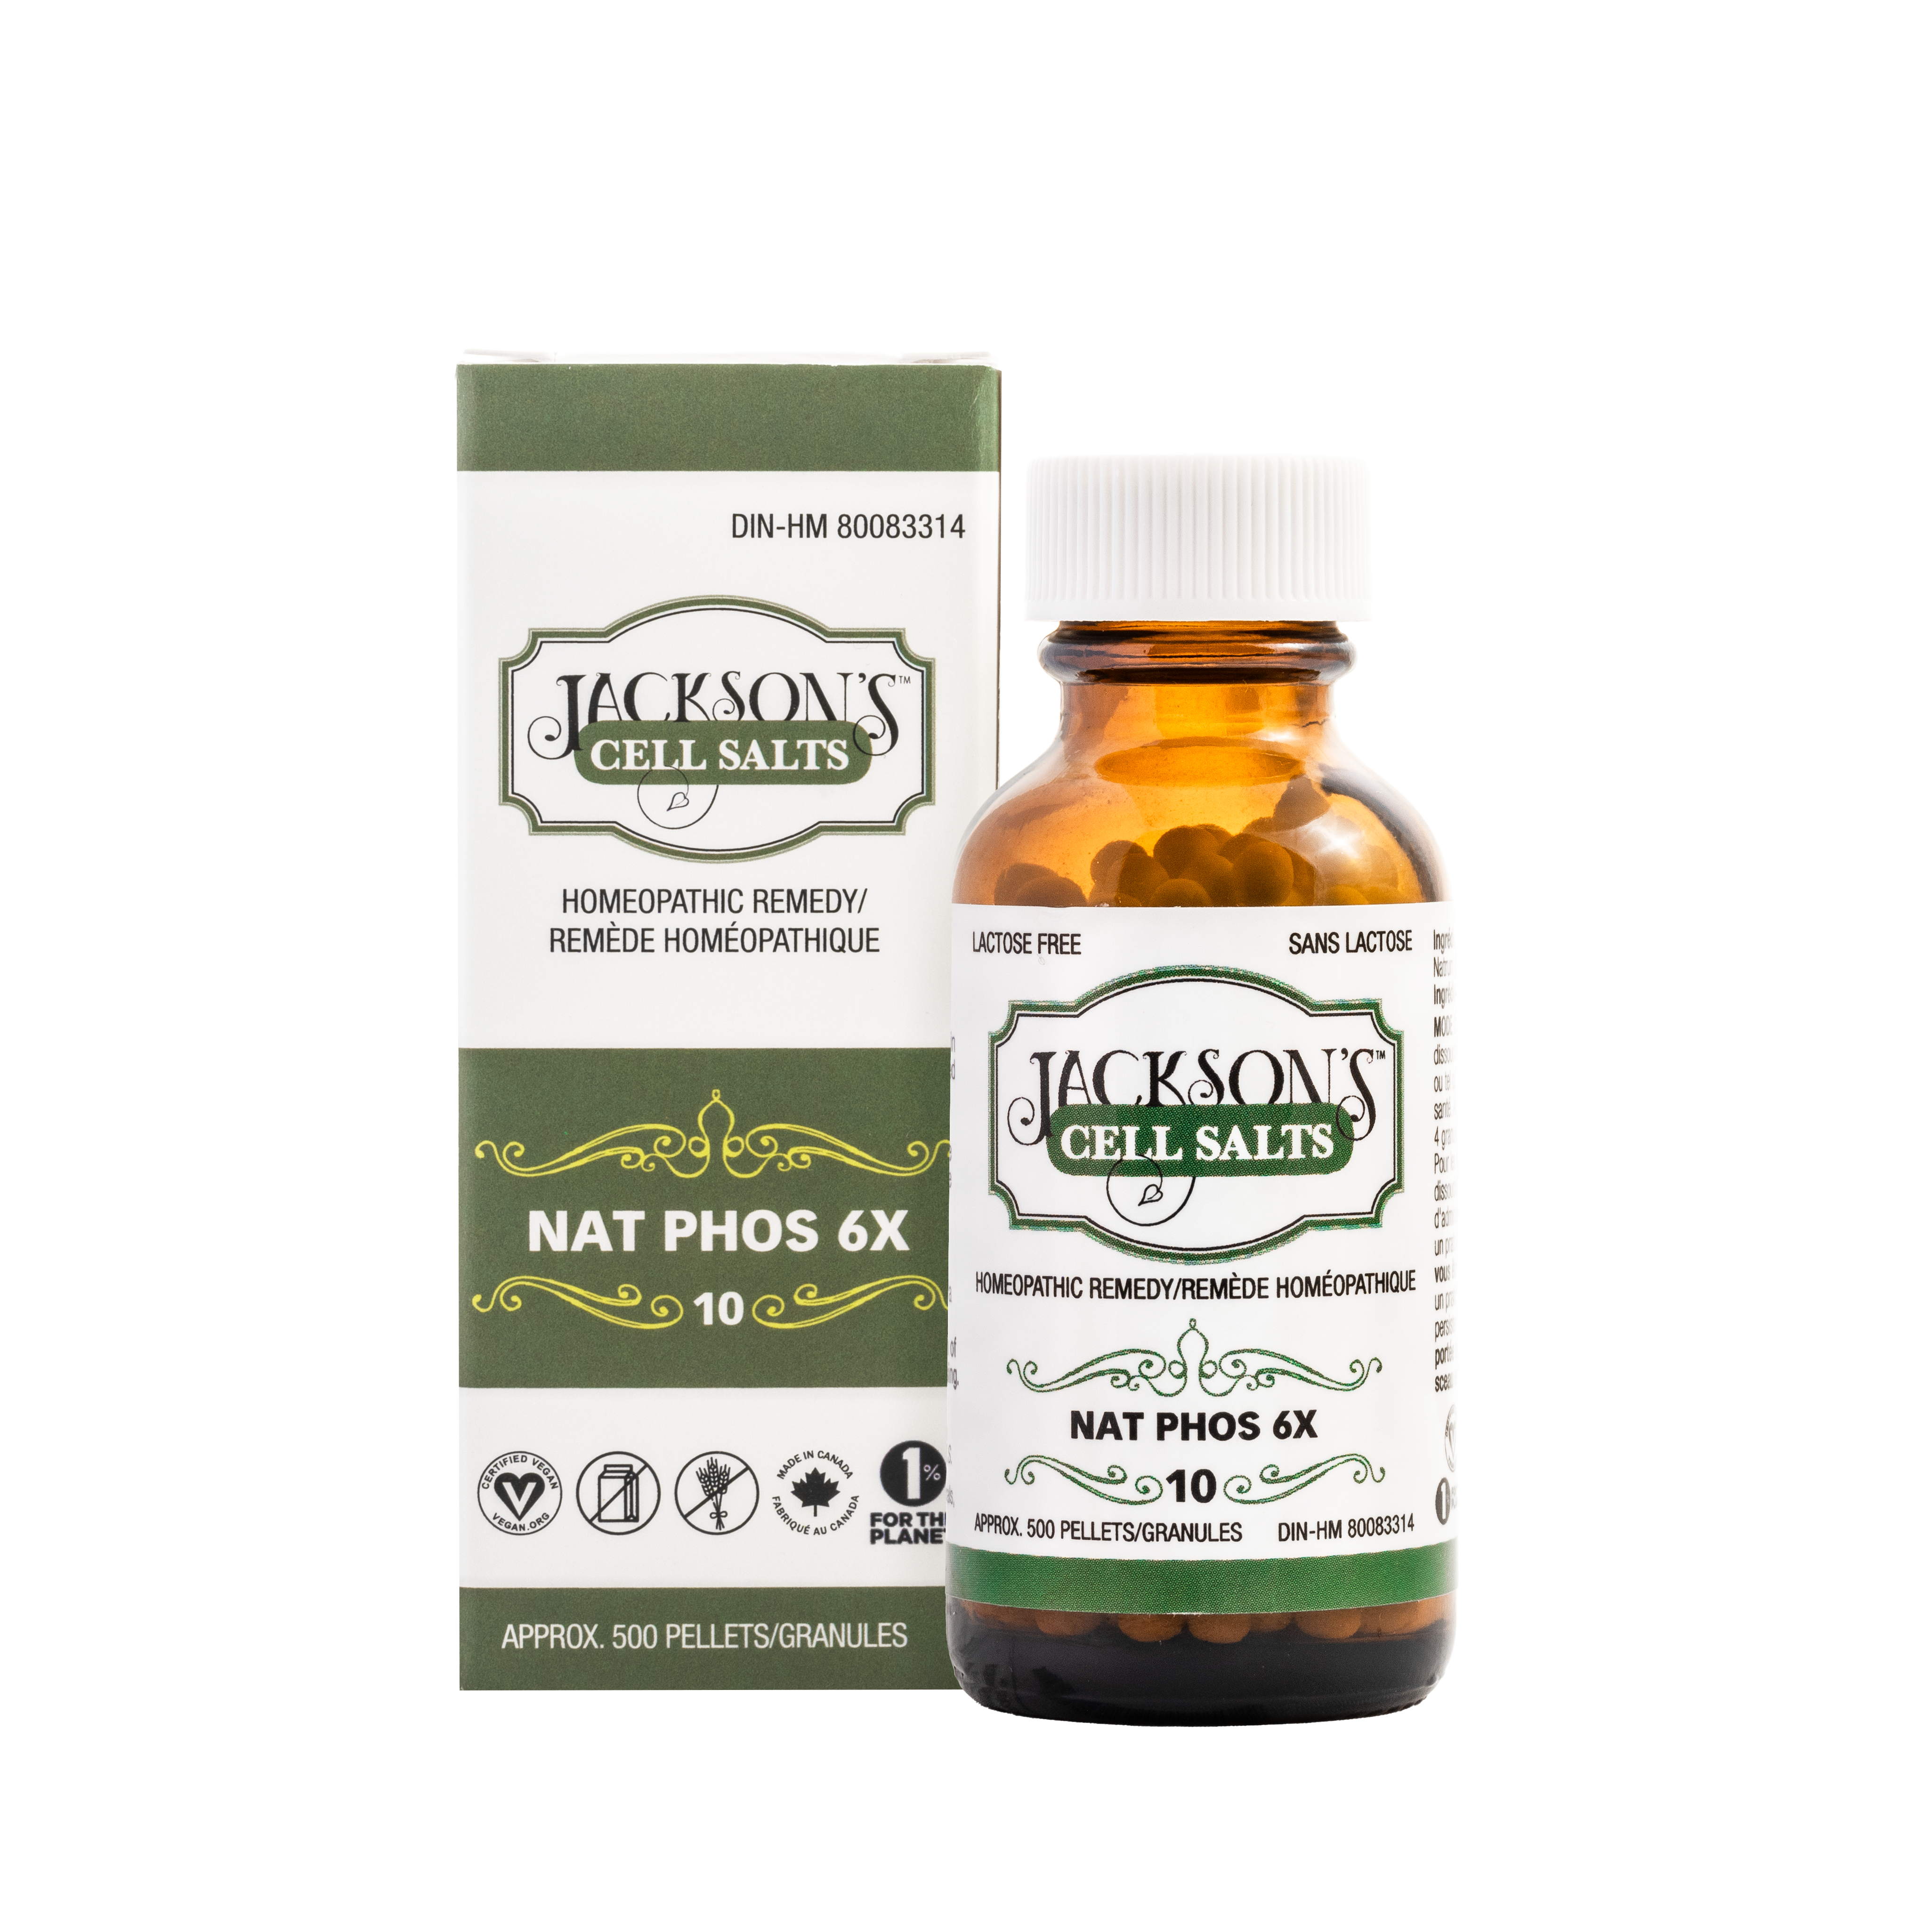 #10 Nat phos 6X (Sodium phosphate) - Certified Vegan, Lactose-Free Schuessler Cell (Tissue) Salt